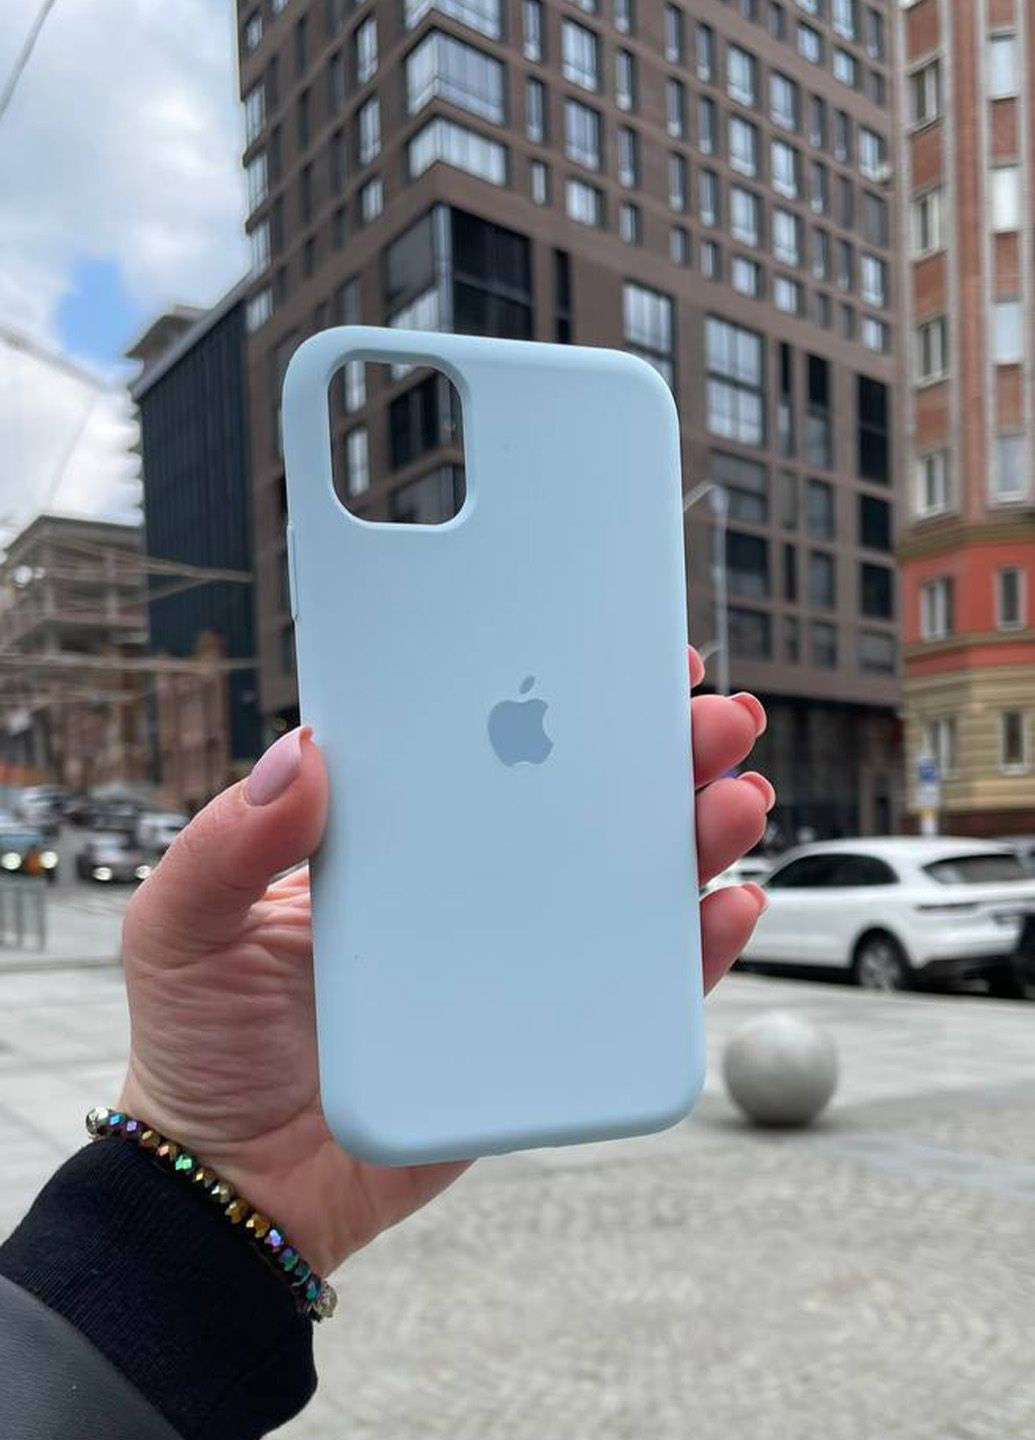 Чехол для iPhone 11 Pro Max голубой Sky Blue Silicone Case силикон кейс No Brand (289754079)